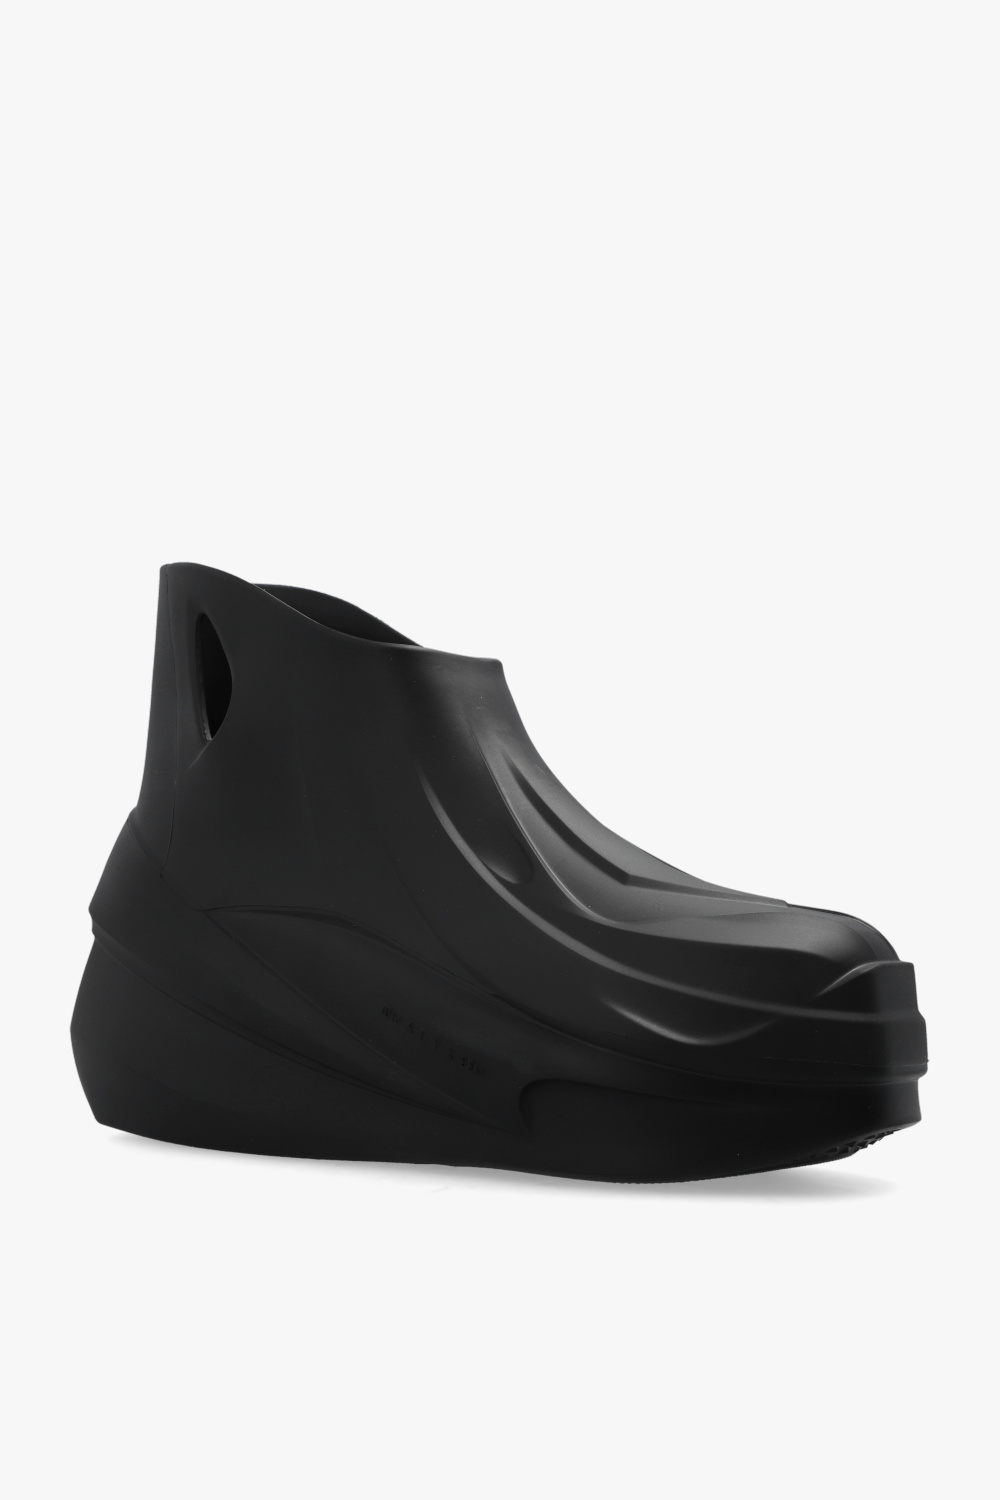 Black 'Mono' shoes 1017 ALYX 9SM - Vitkac GB